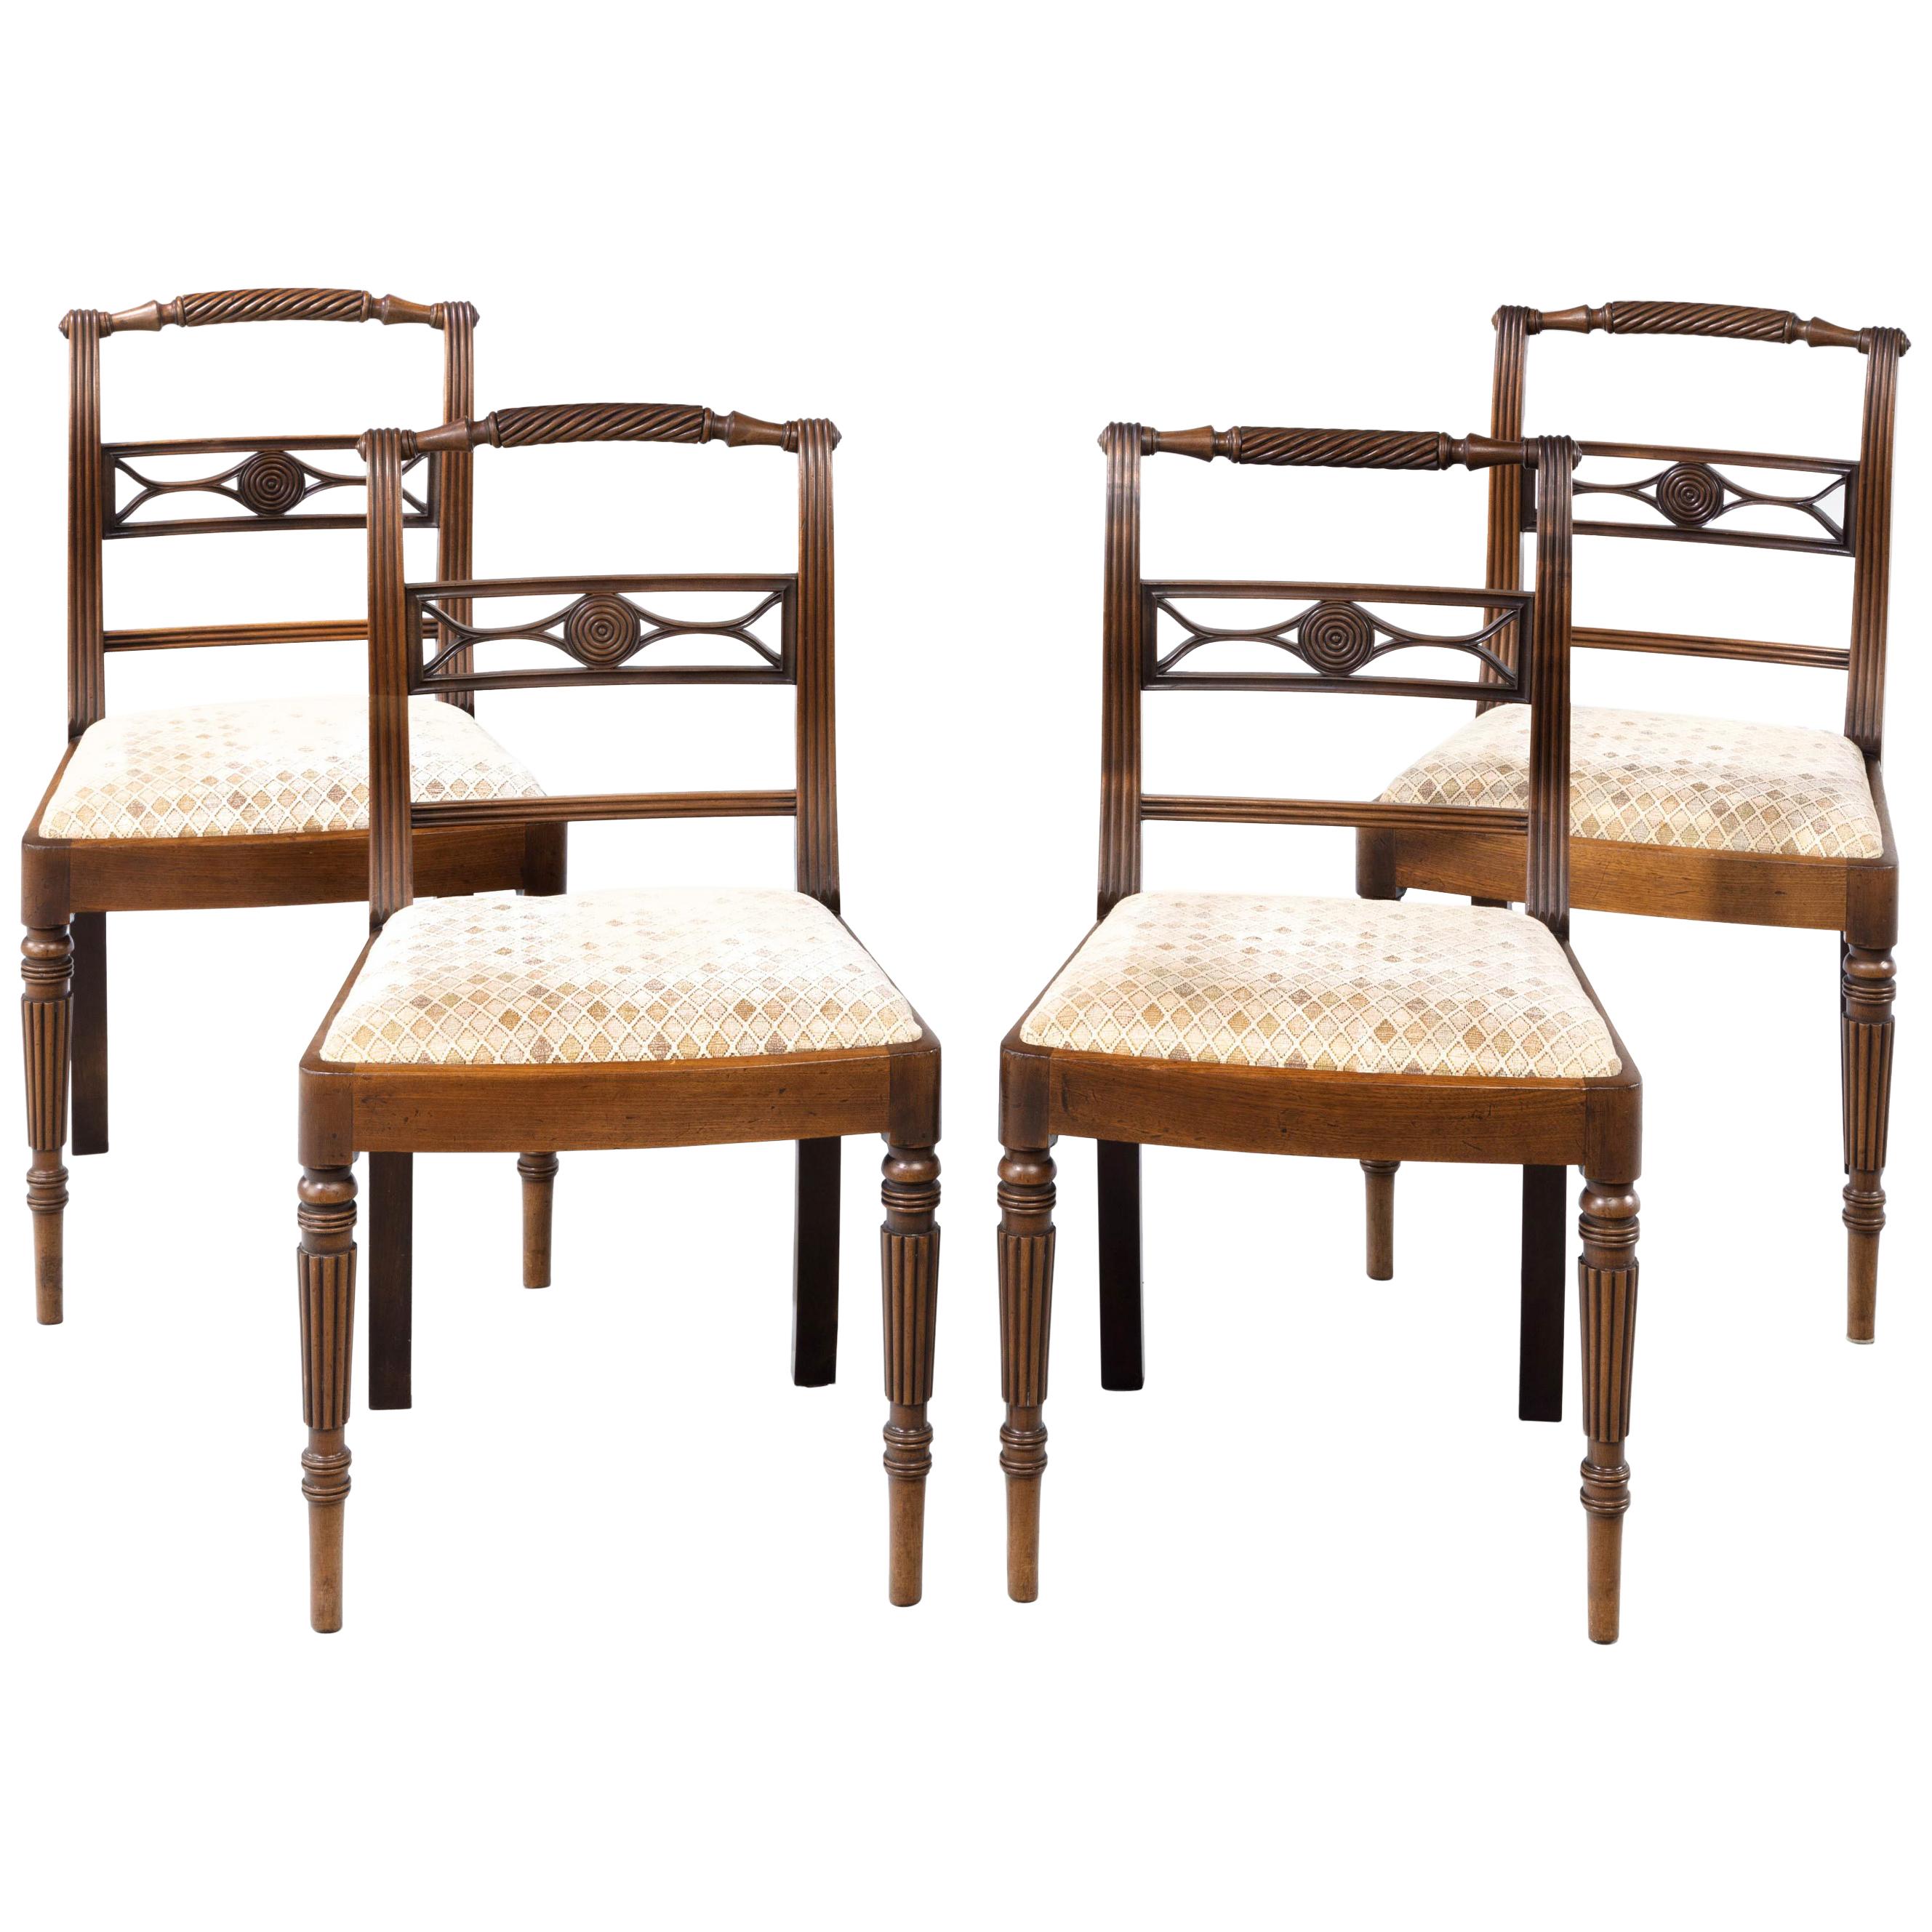 An Elegant Set of Four Whitehaven Regency Period Single Chairs